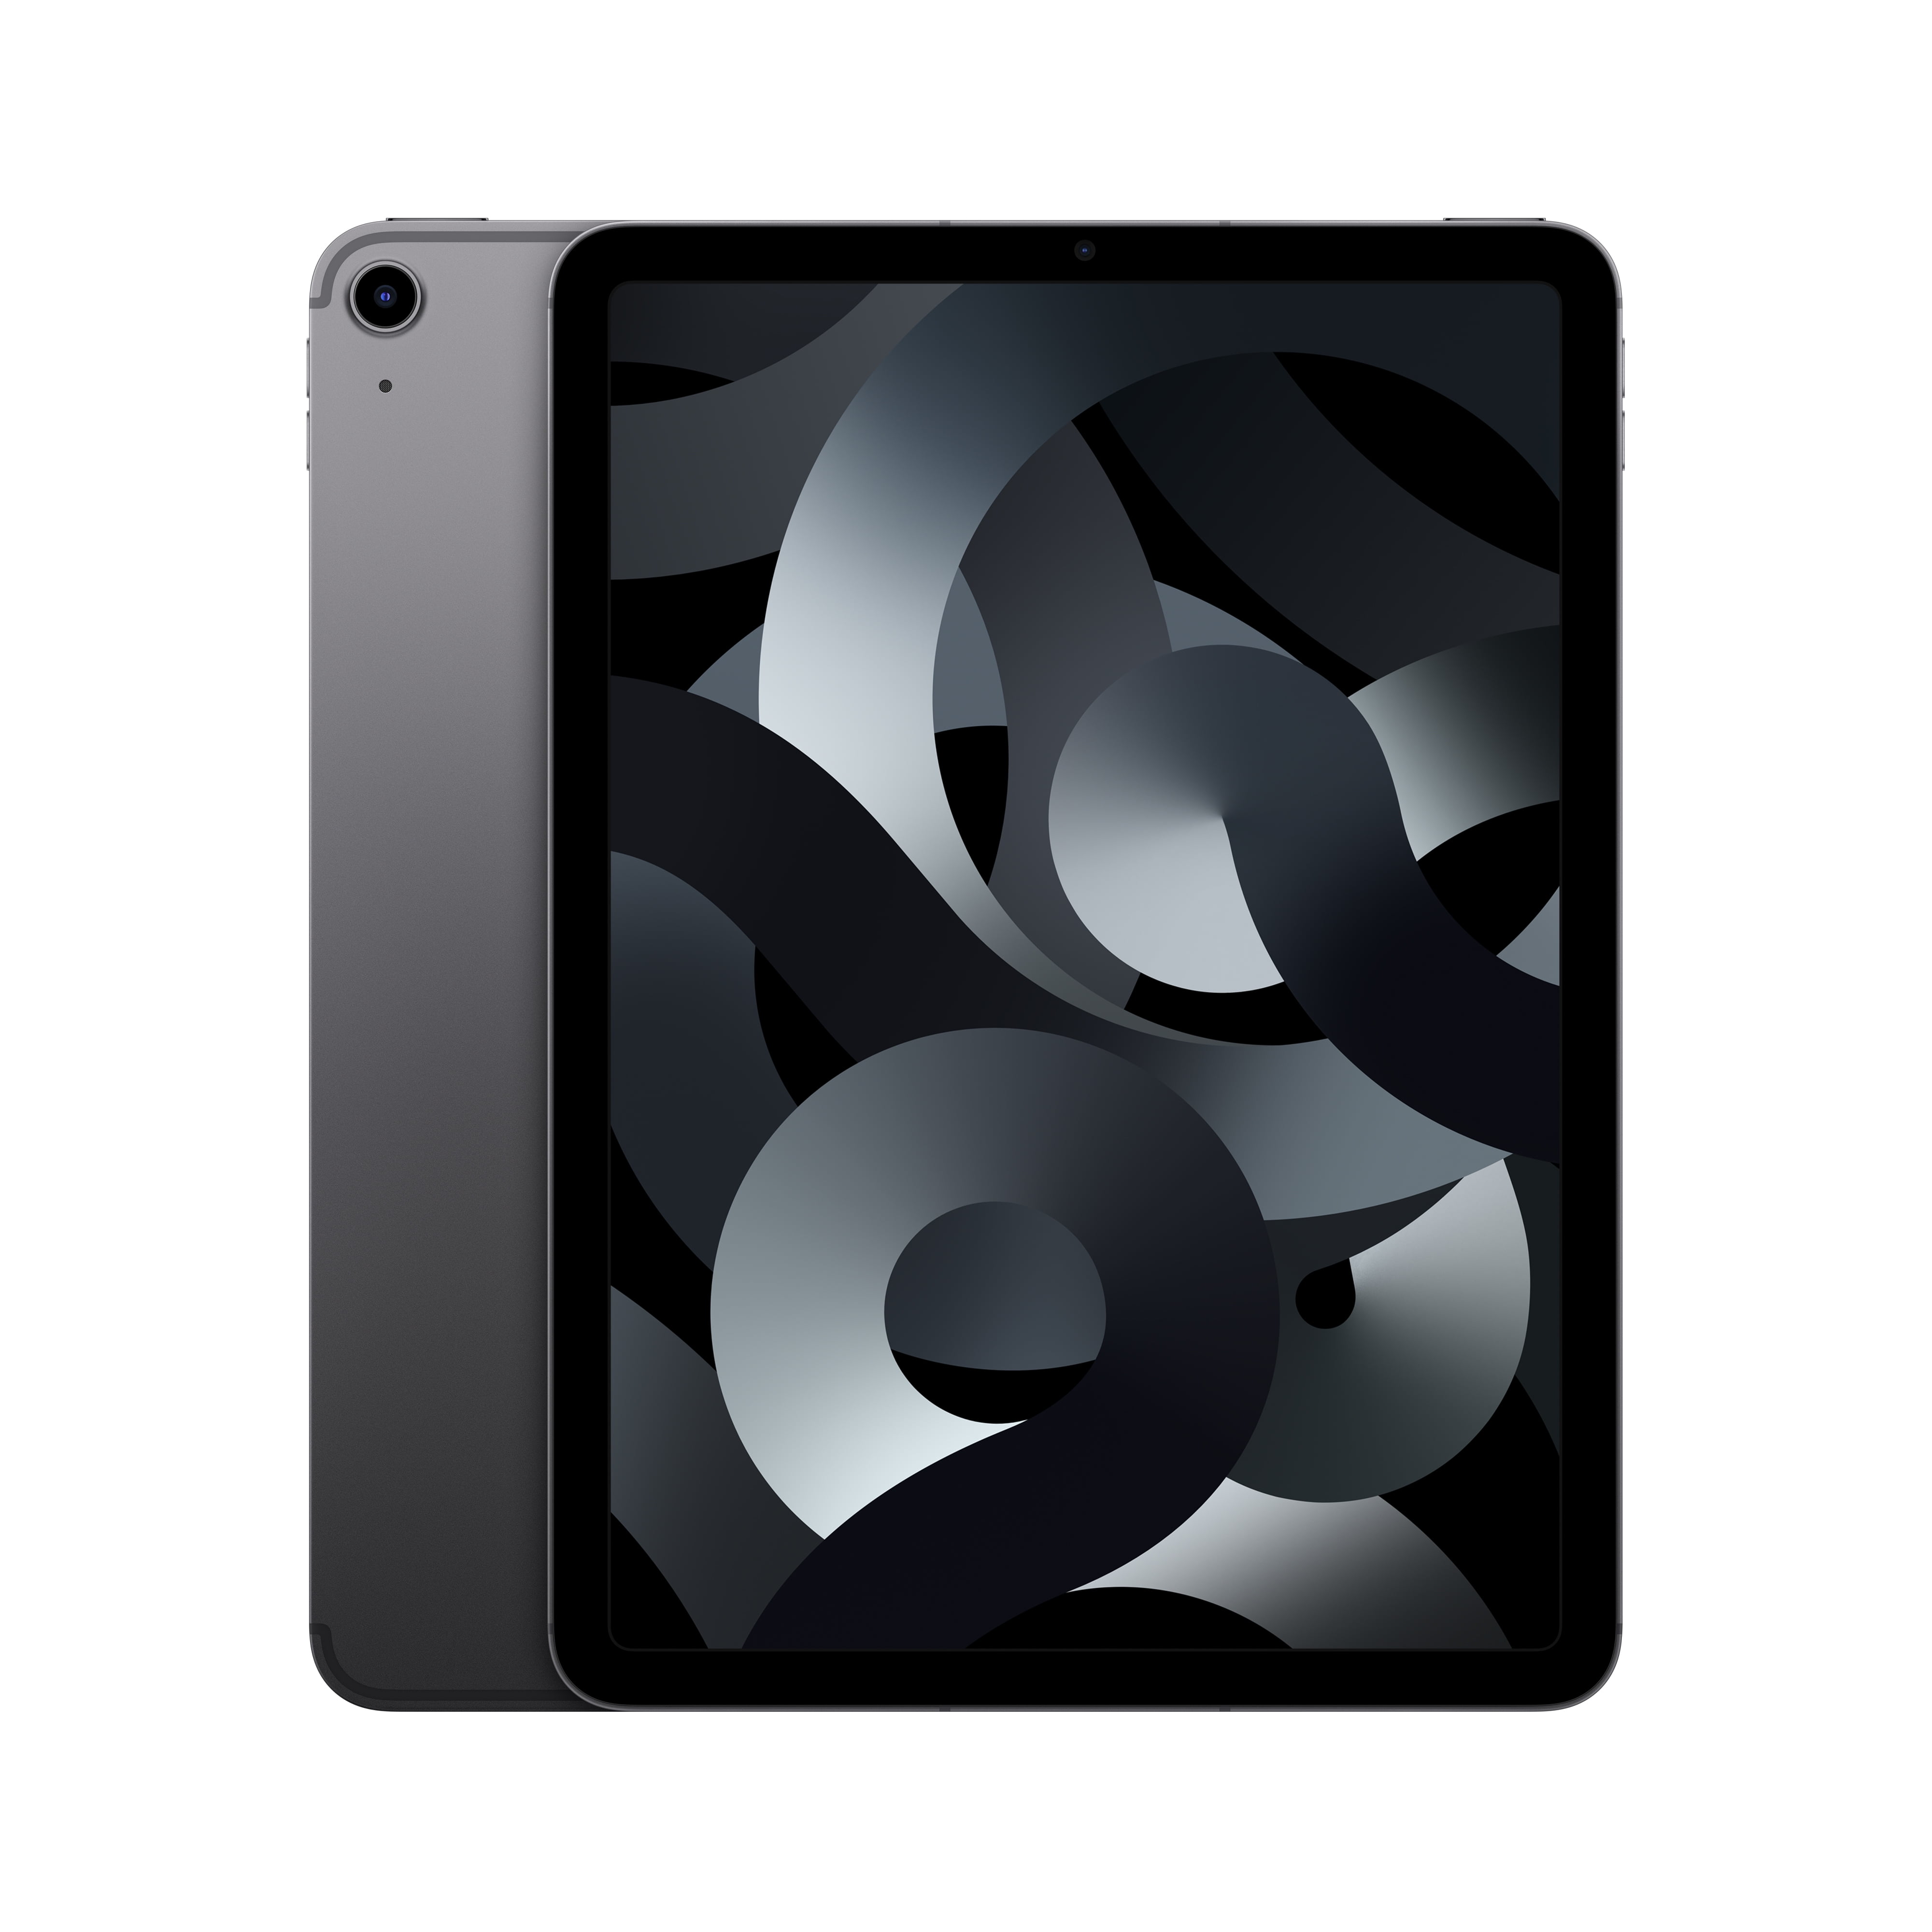 Apple .9 inch iPad Air Wi Fi GB   Space Gray 5th Generation